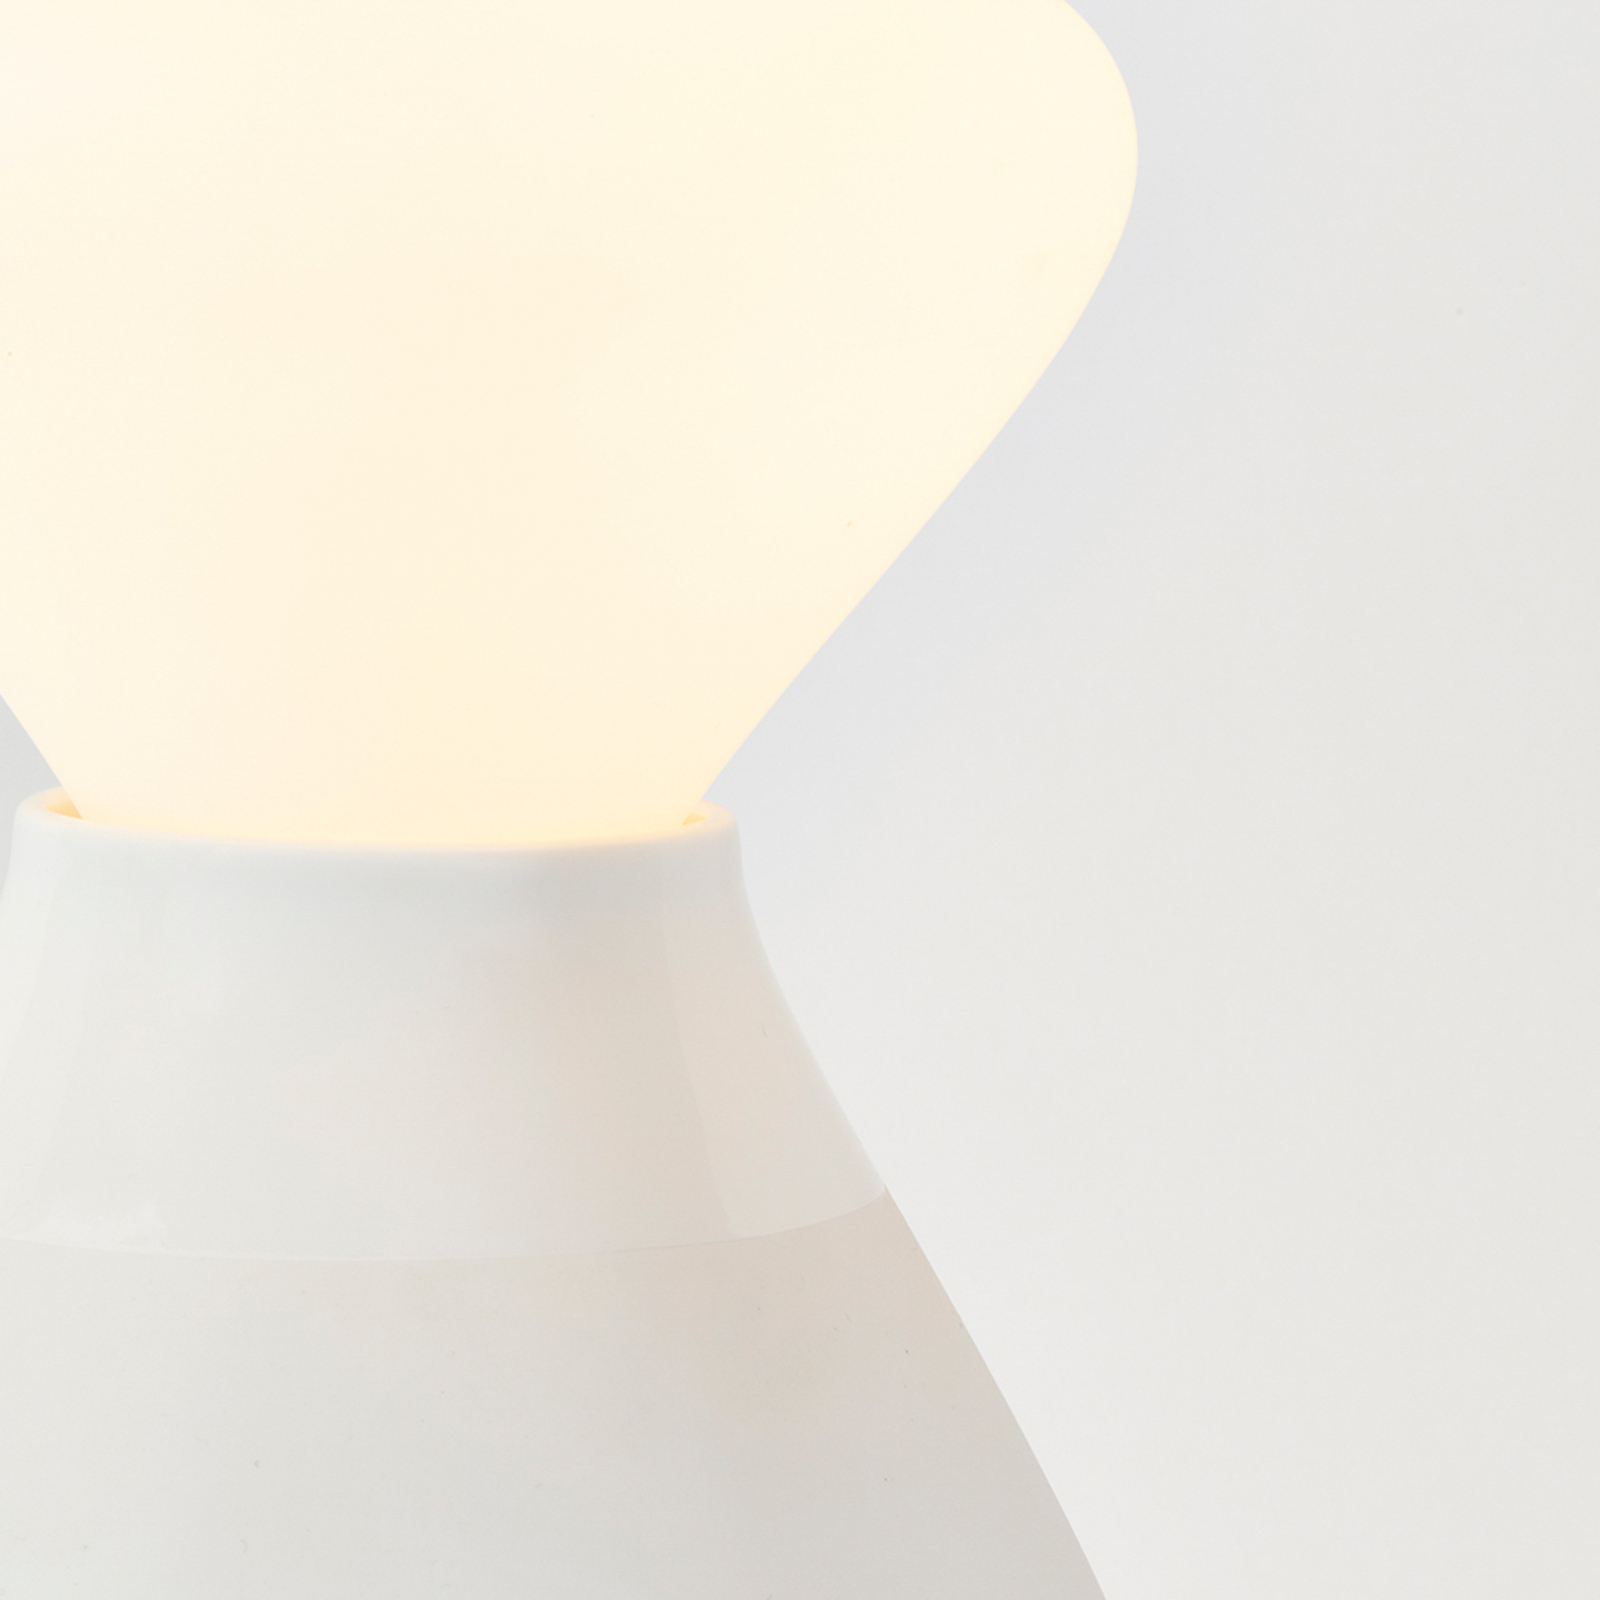 Tala lampe à poser Reflection Noma, design David Weeks